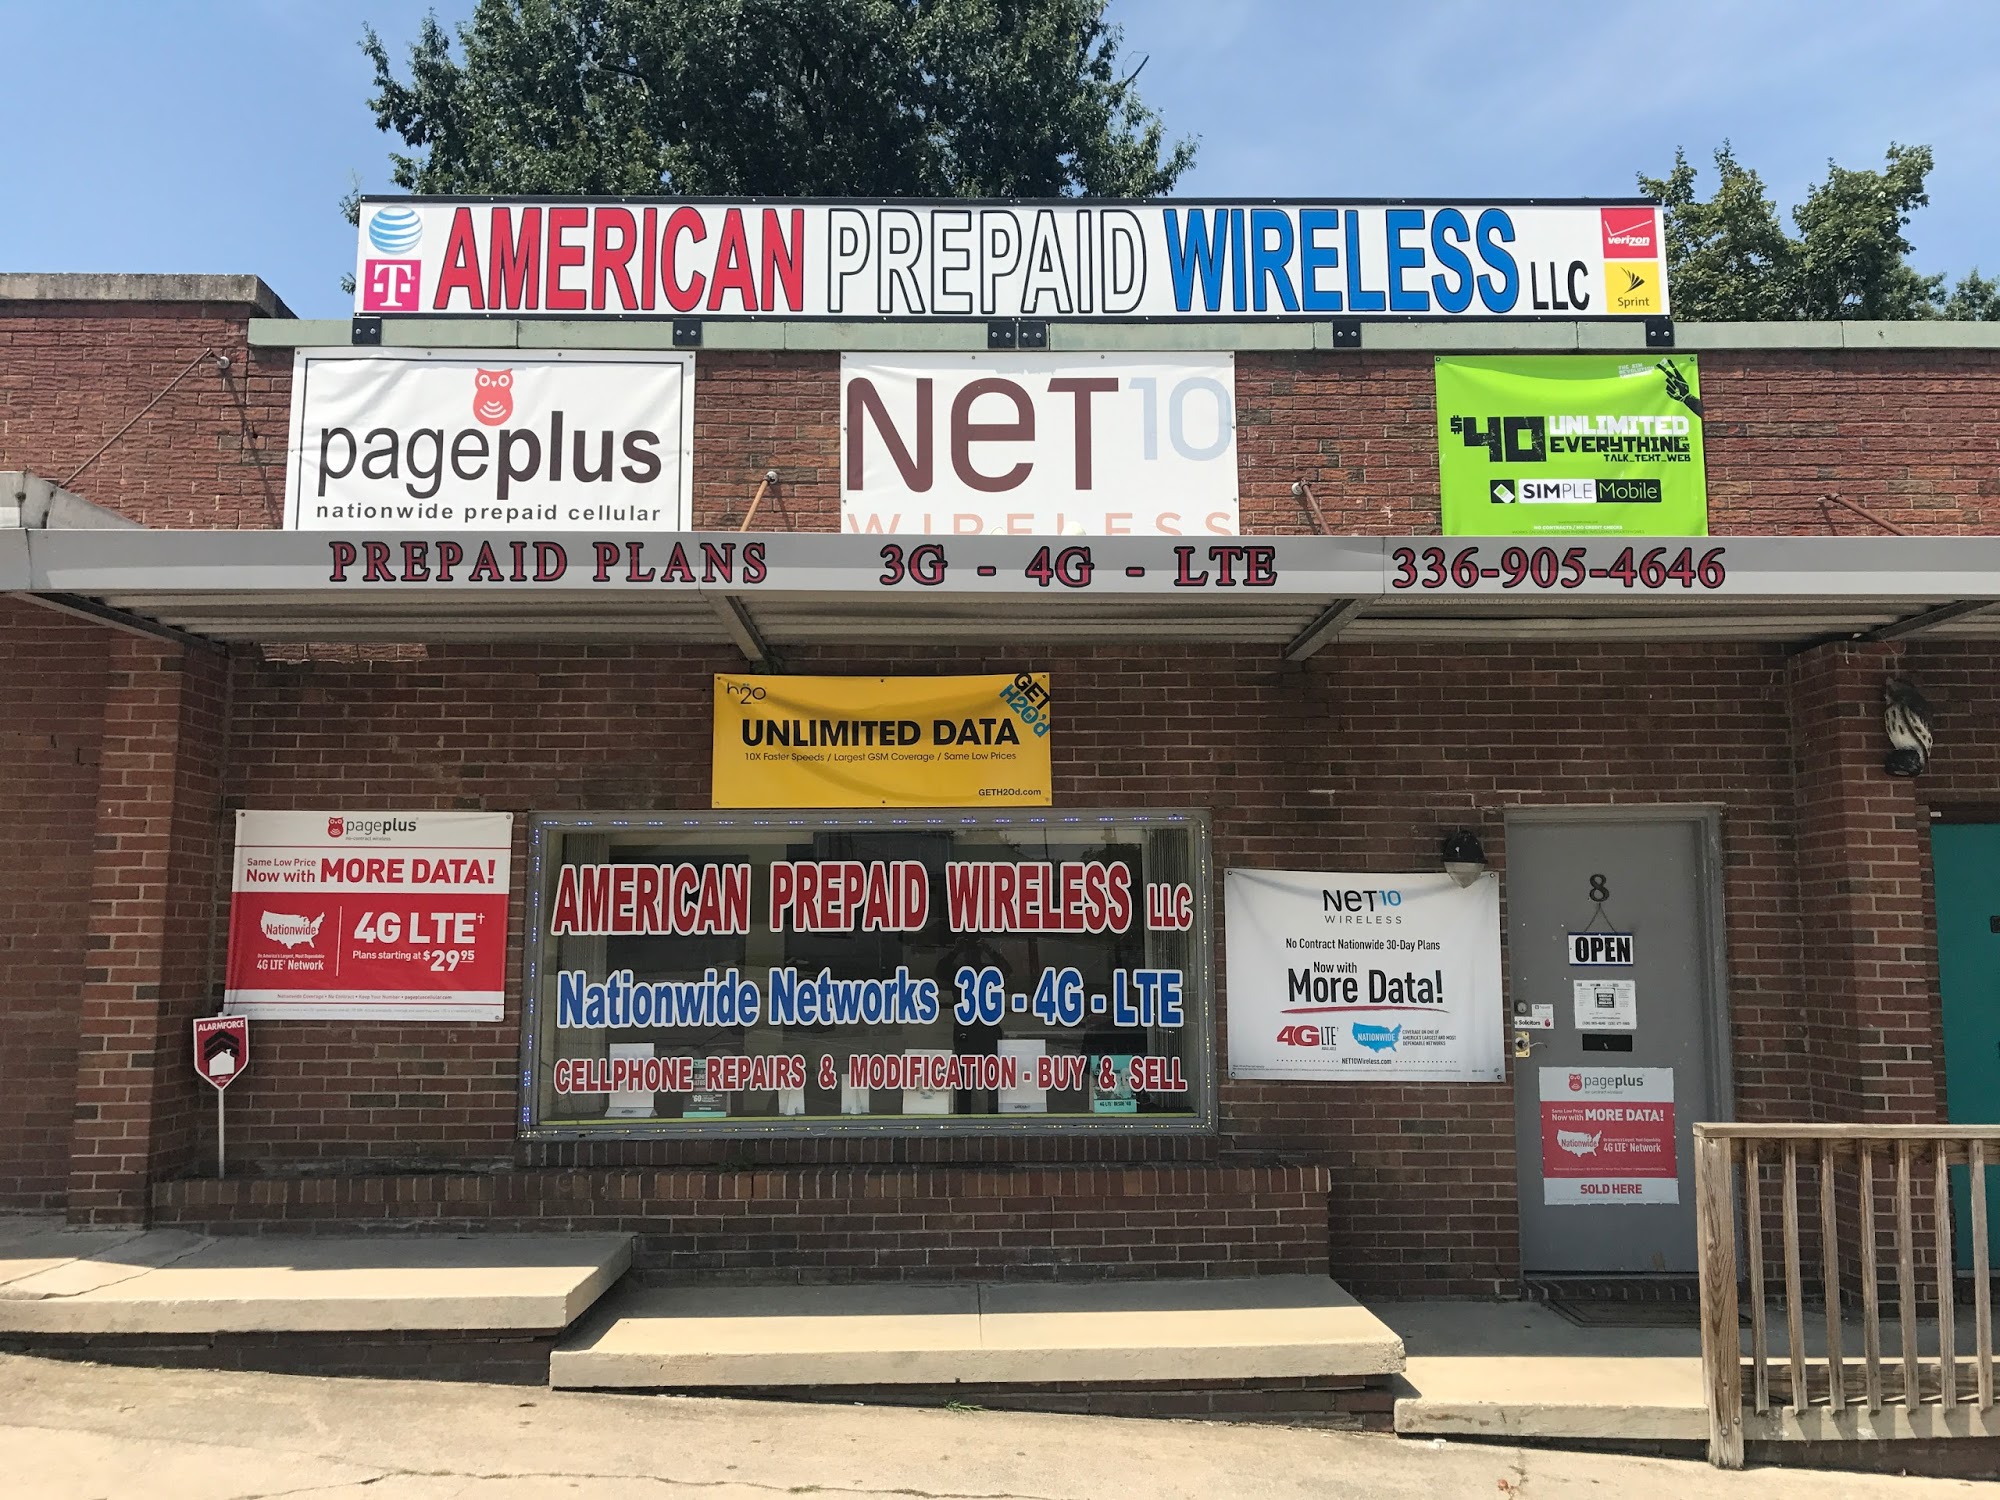 American Wireless